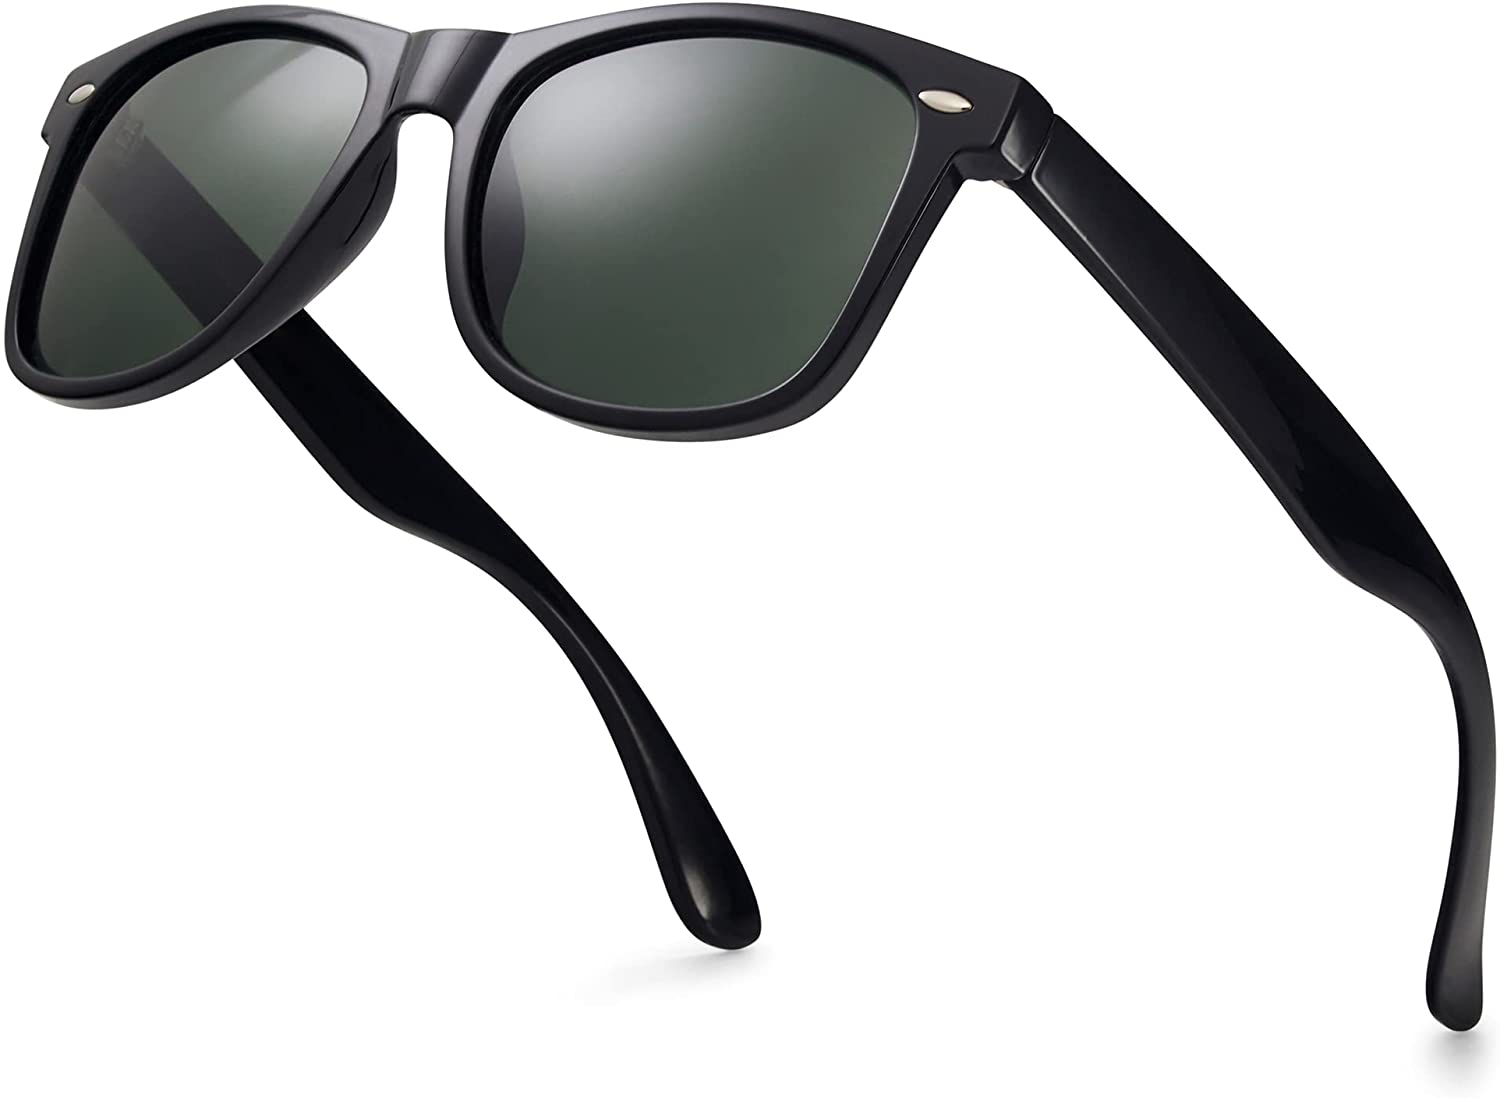 Polarized sunglasses men Classics Multi-Color Deal Vintage Hot Rays brand DESIGN 